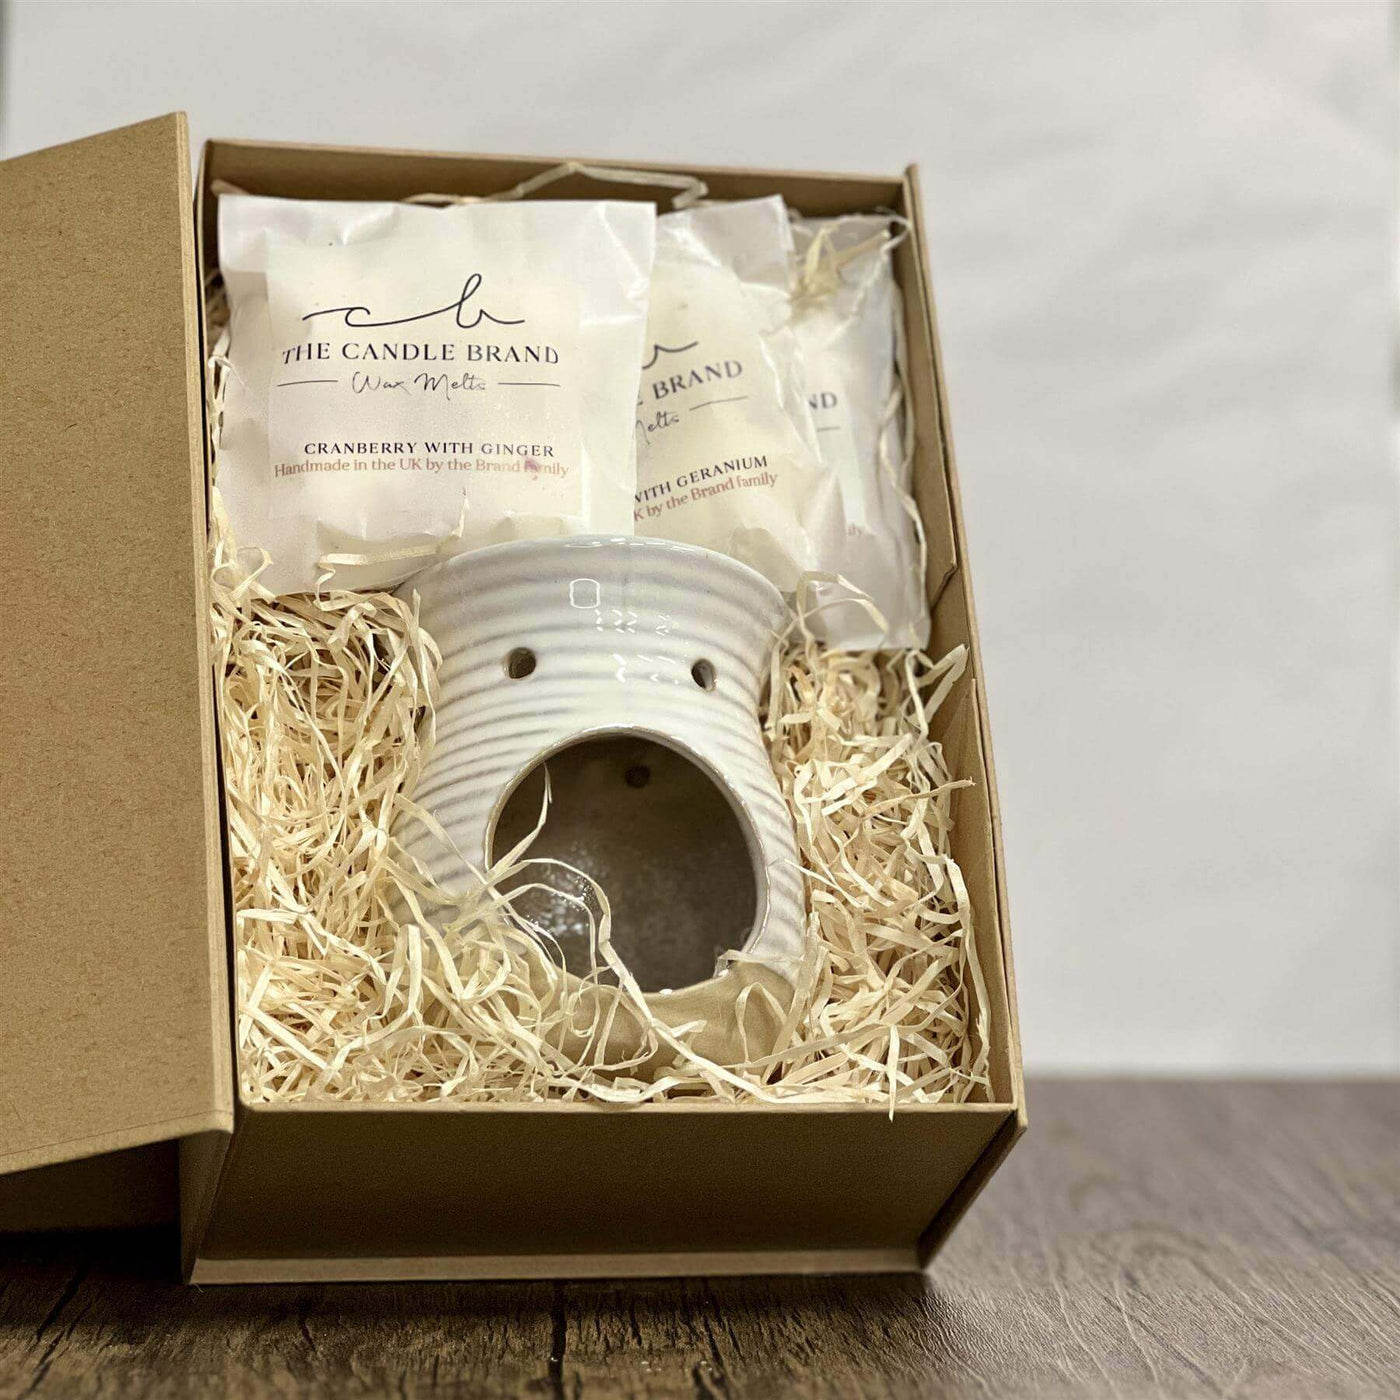 Eco-Friendly Burner Gift Set - Best Seller The Candle Brand Home Fragrance